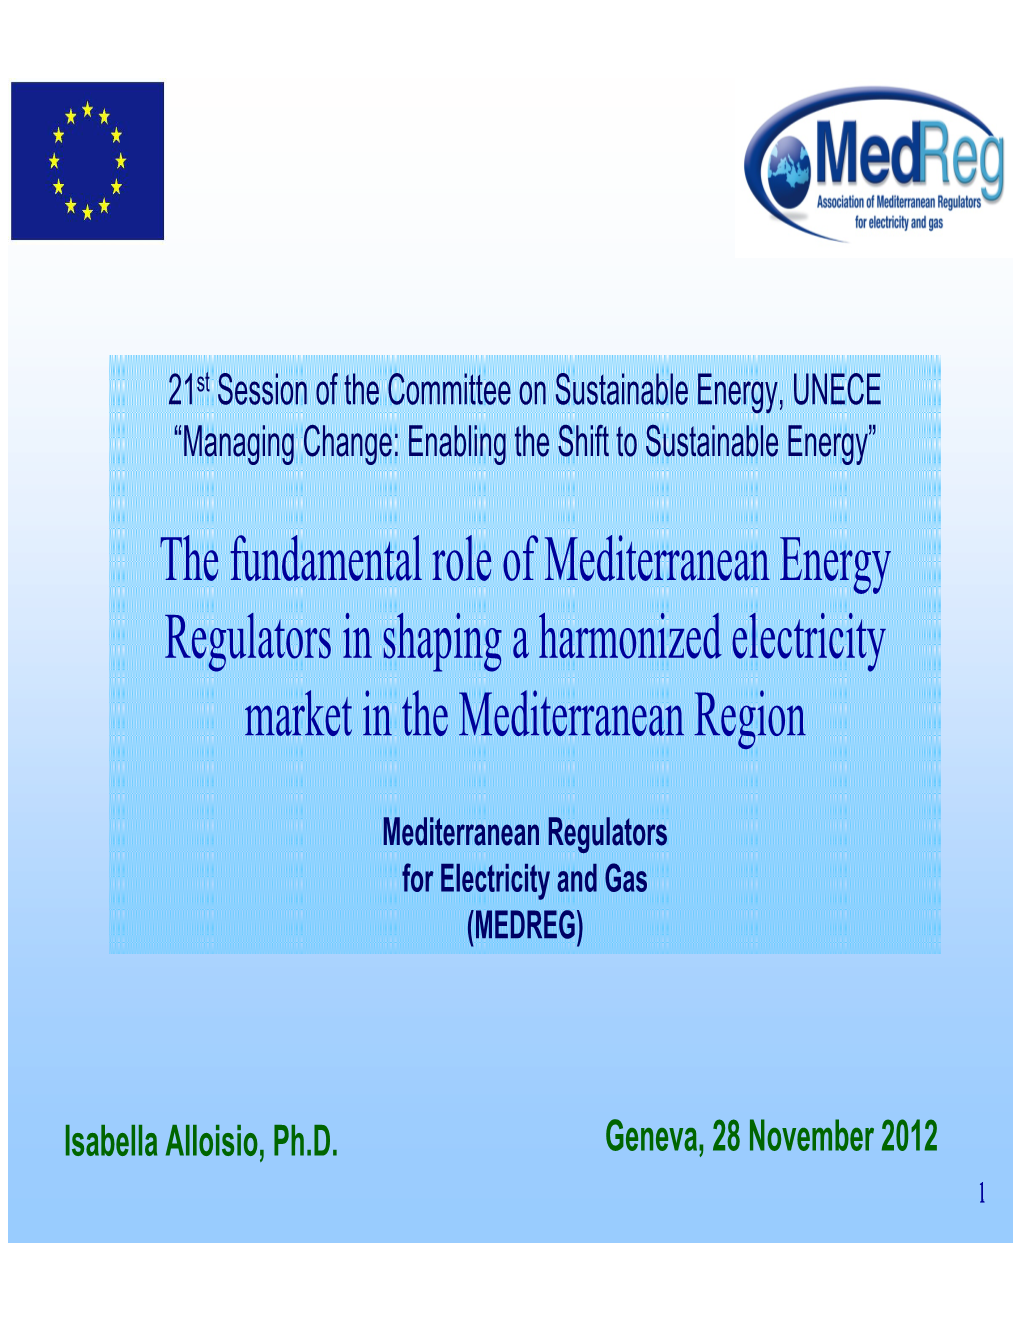 The Fundamental Role of Mediterranean Energy Regulators in Shaping a Harmonized Electricity Market in the Mediterranean Region